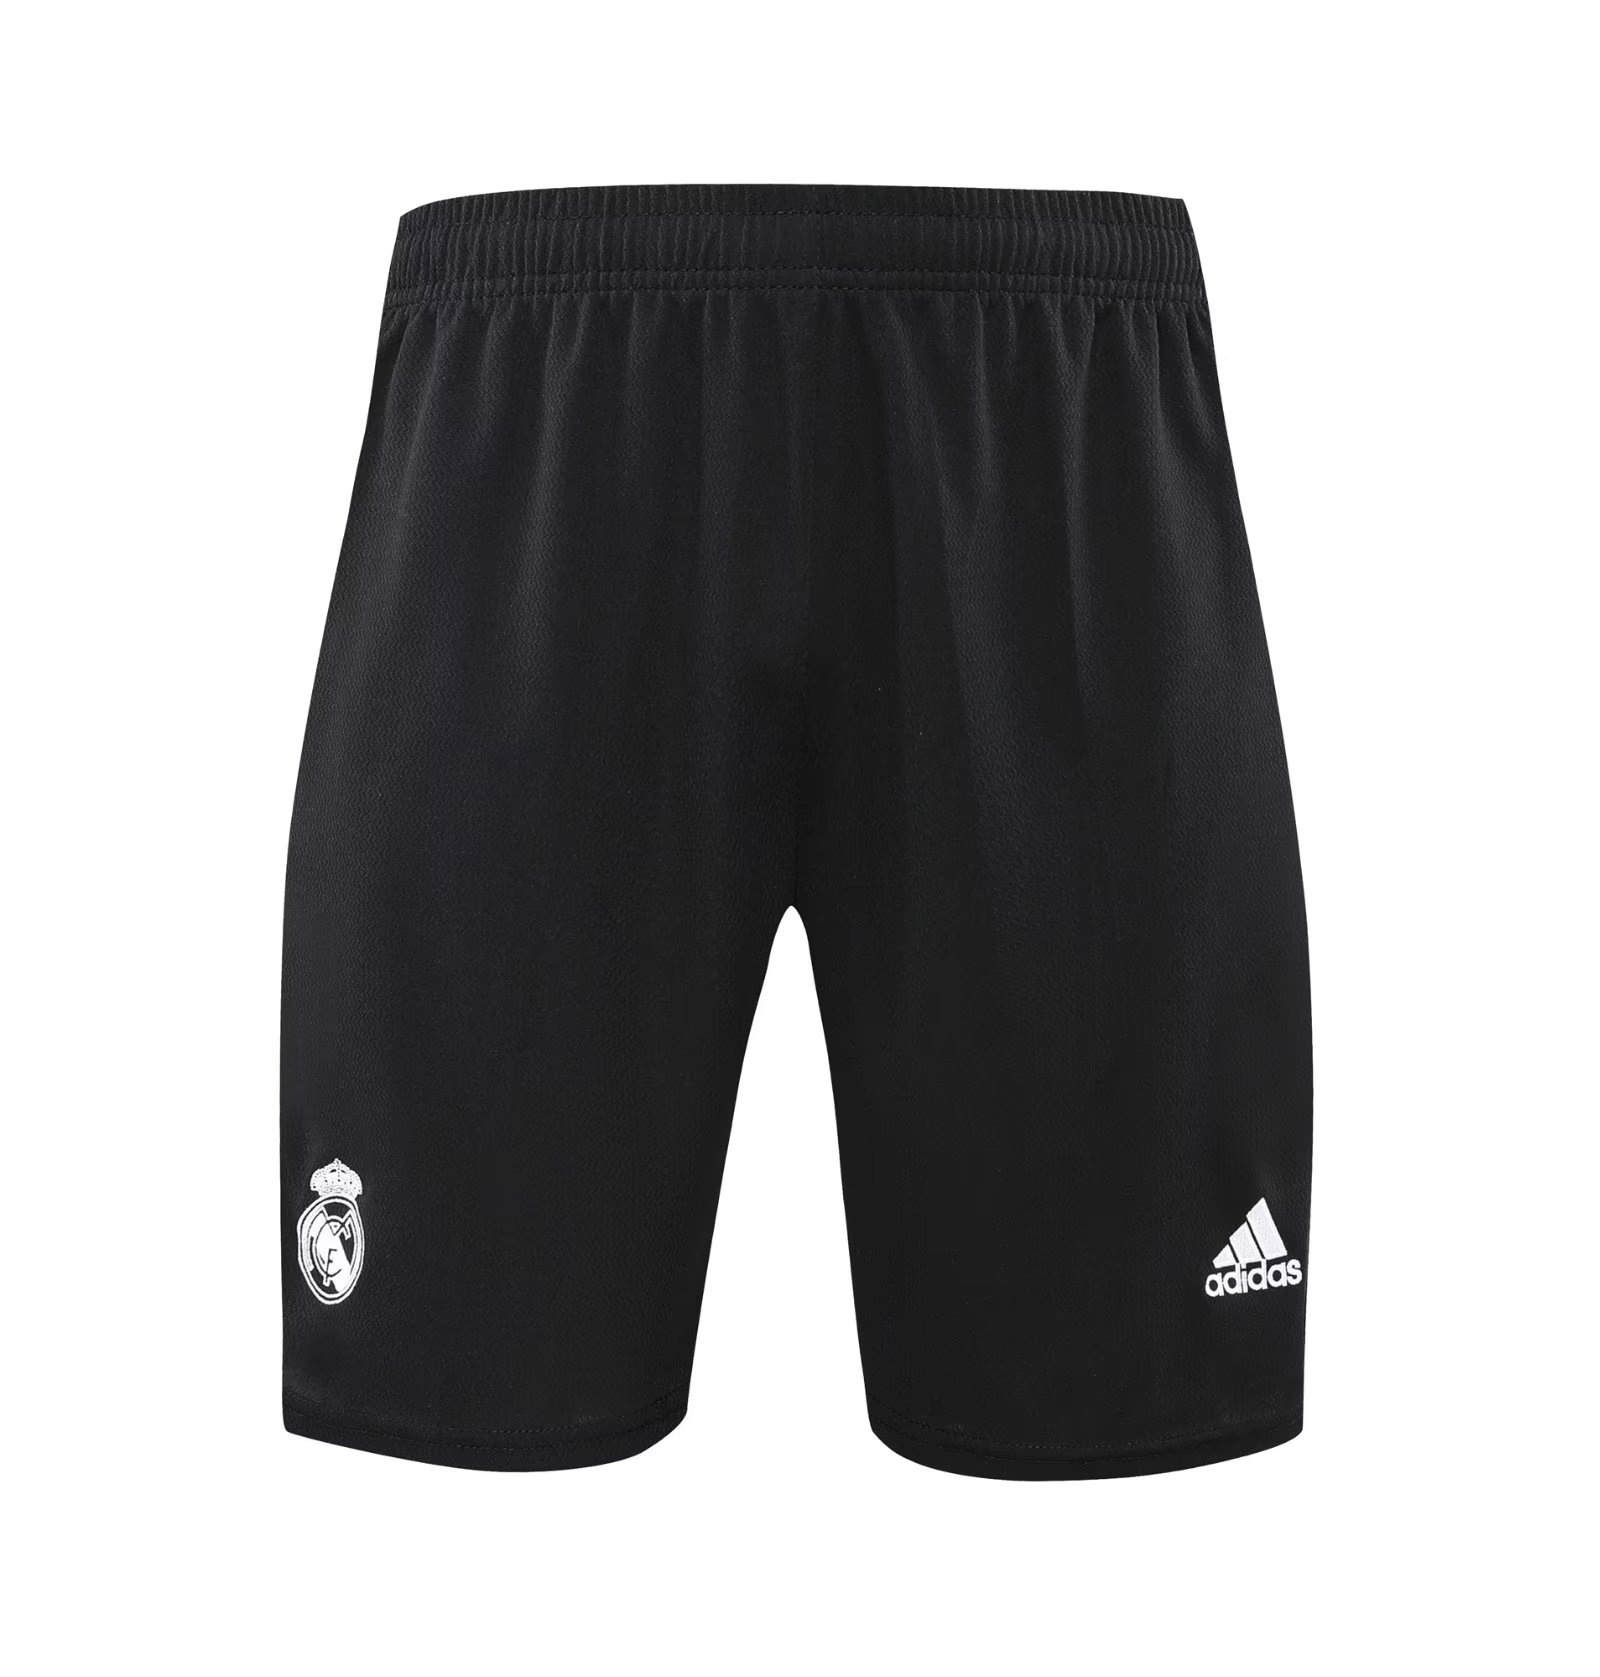 Real Madrid Black Sleeveless Jersey with Shorts in India - COPYCATZ